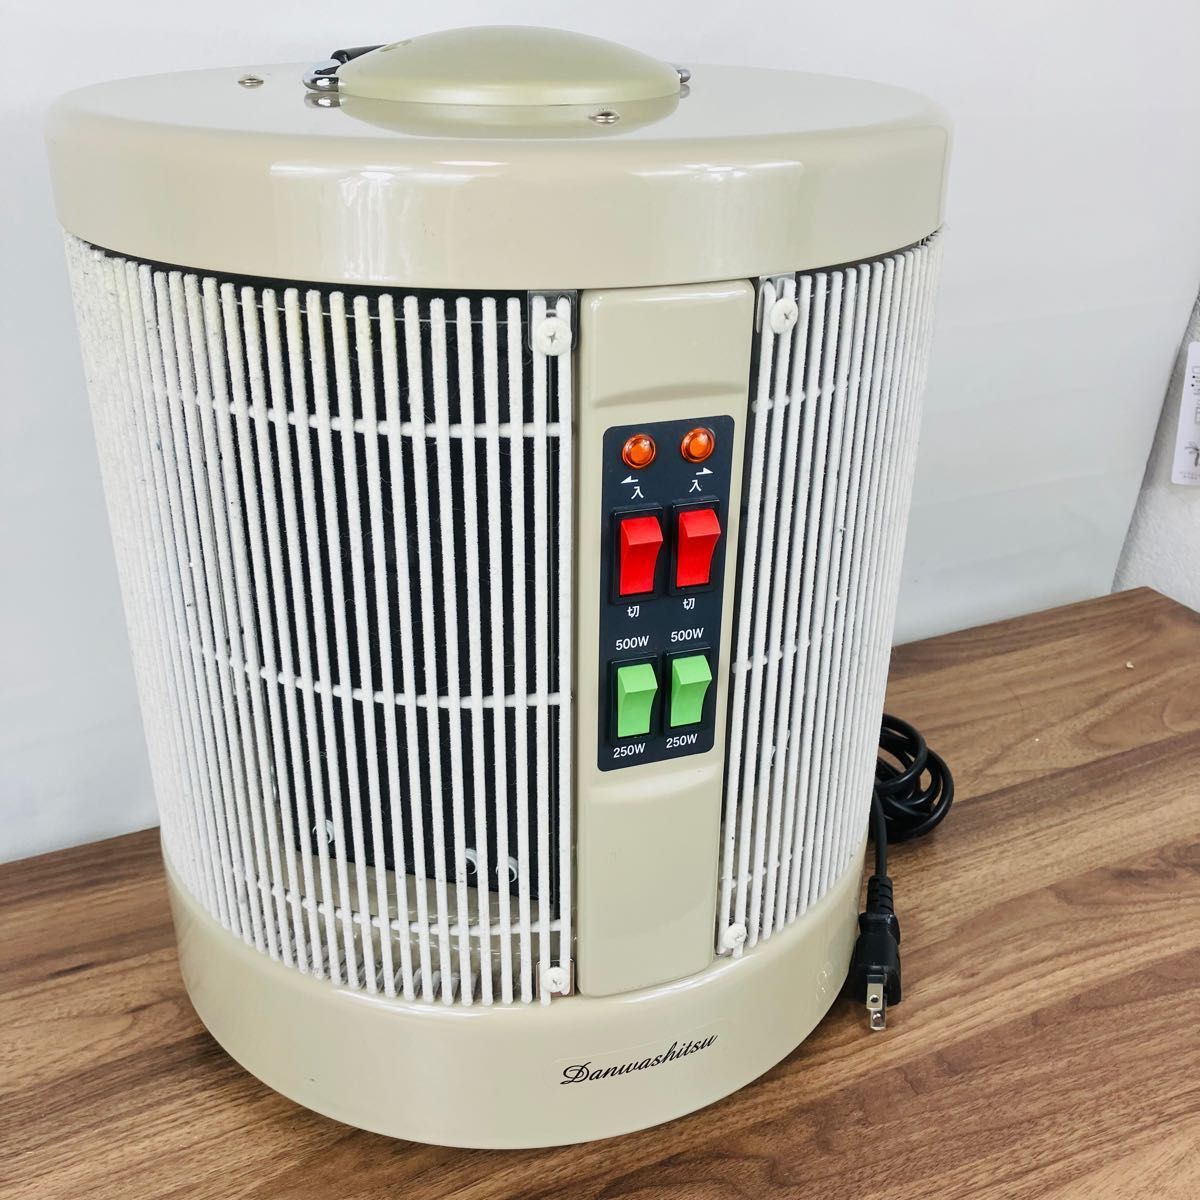 暖話室 1000型 DAN1000-R16 IM-1000